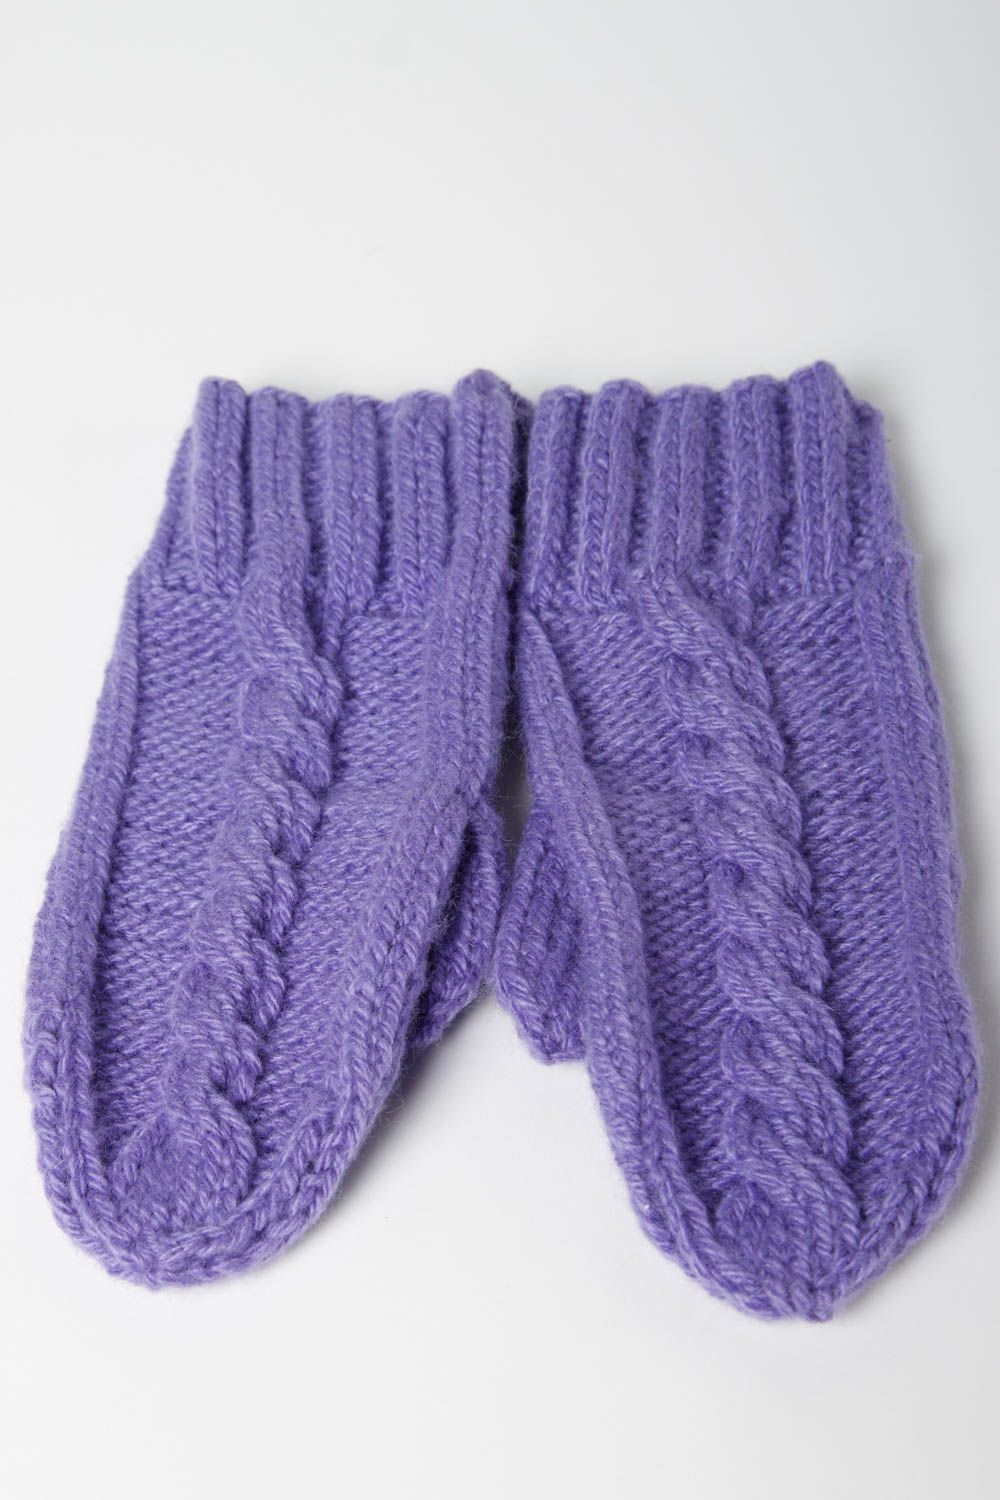 Handmade knitted mittens winter mittens winter accessories hand-knitted mittens photo 4